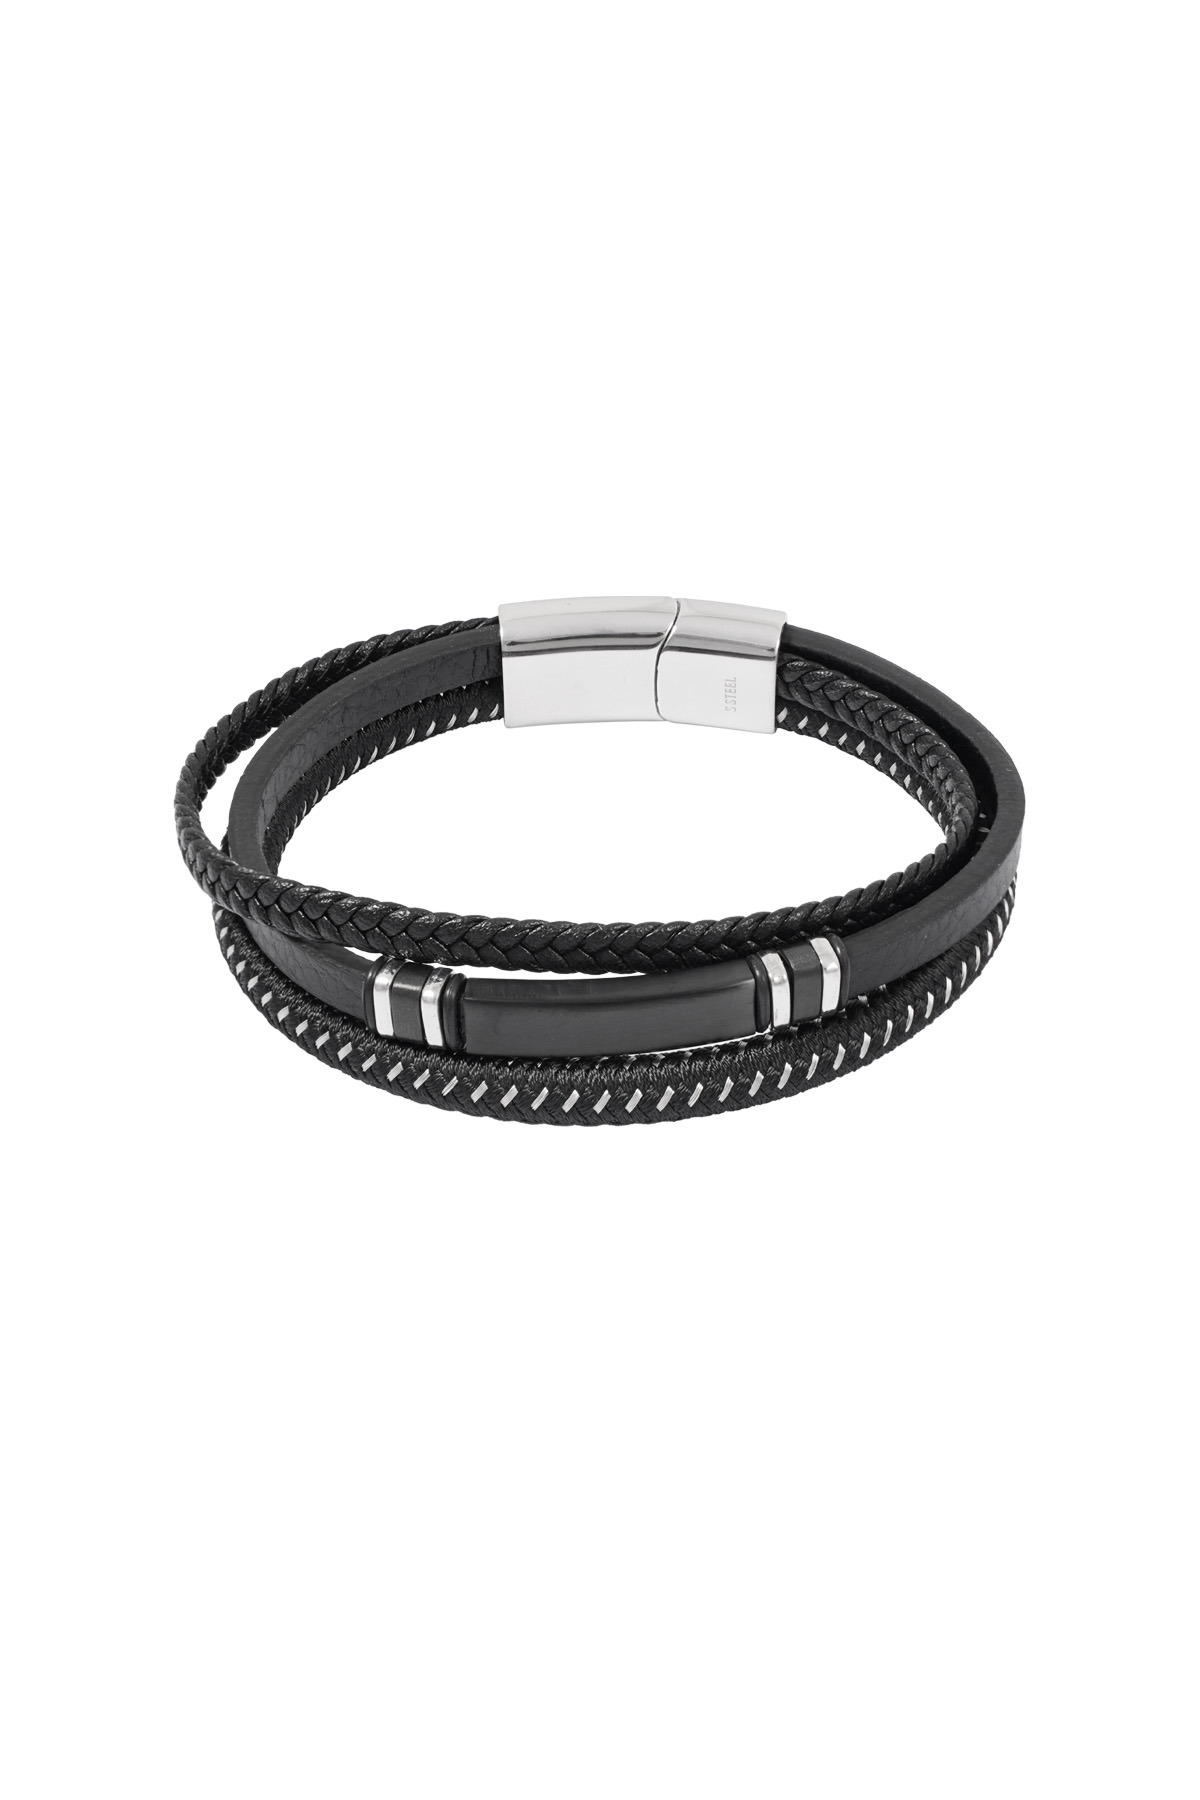 Casual double braided men's bracelet - black/silver